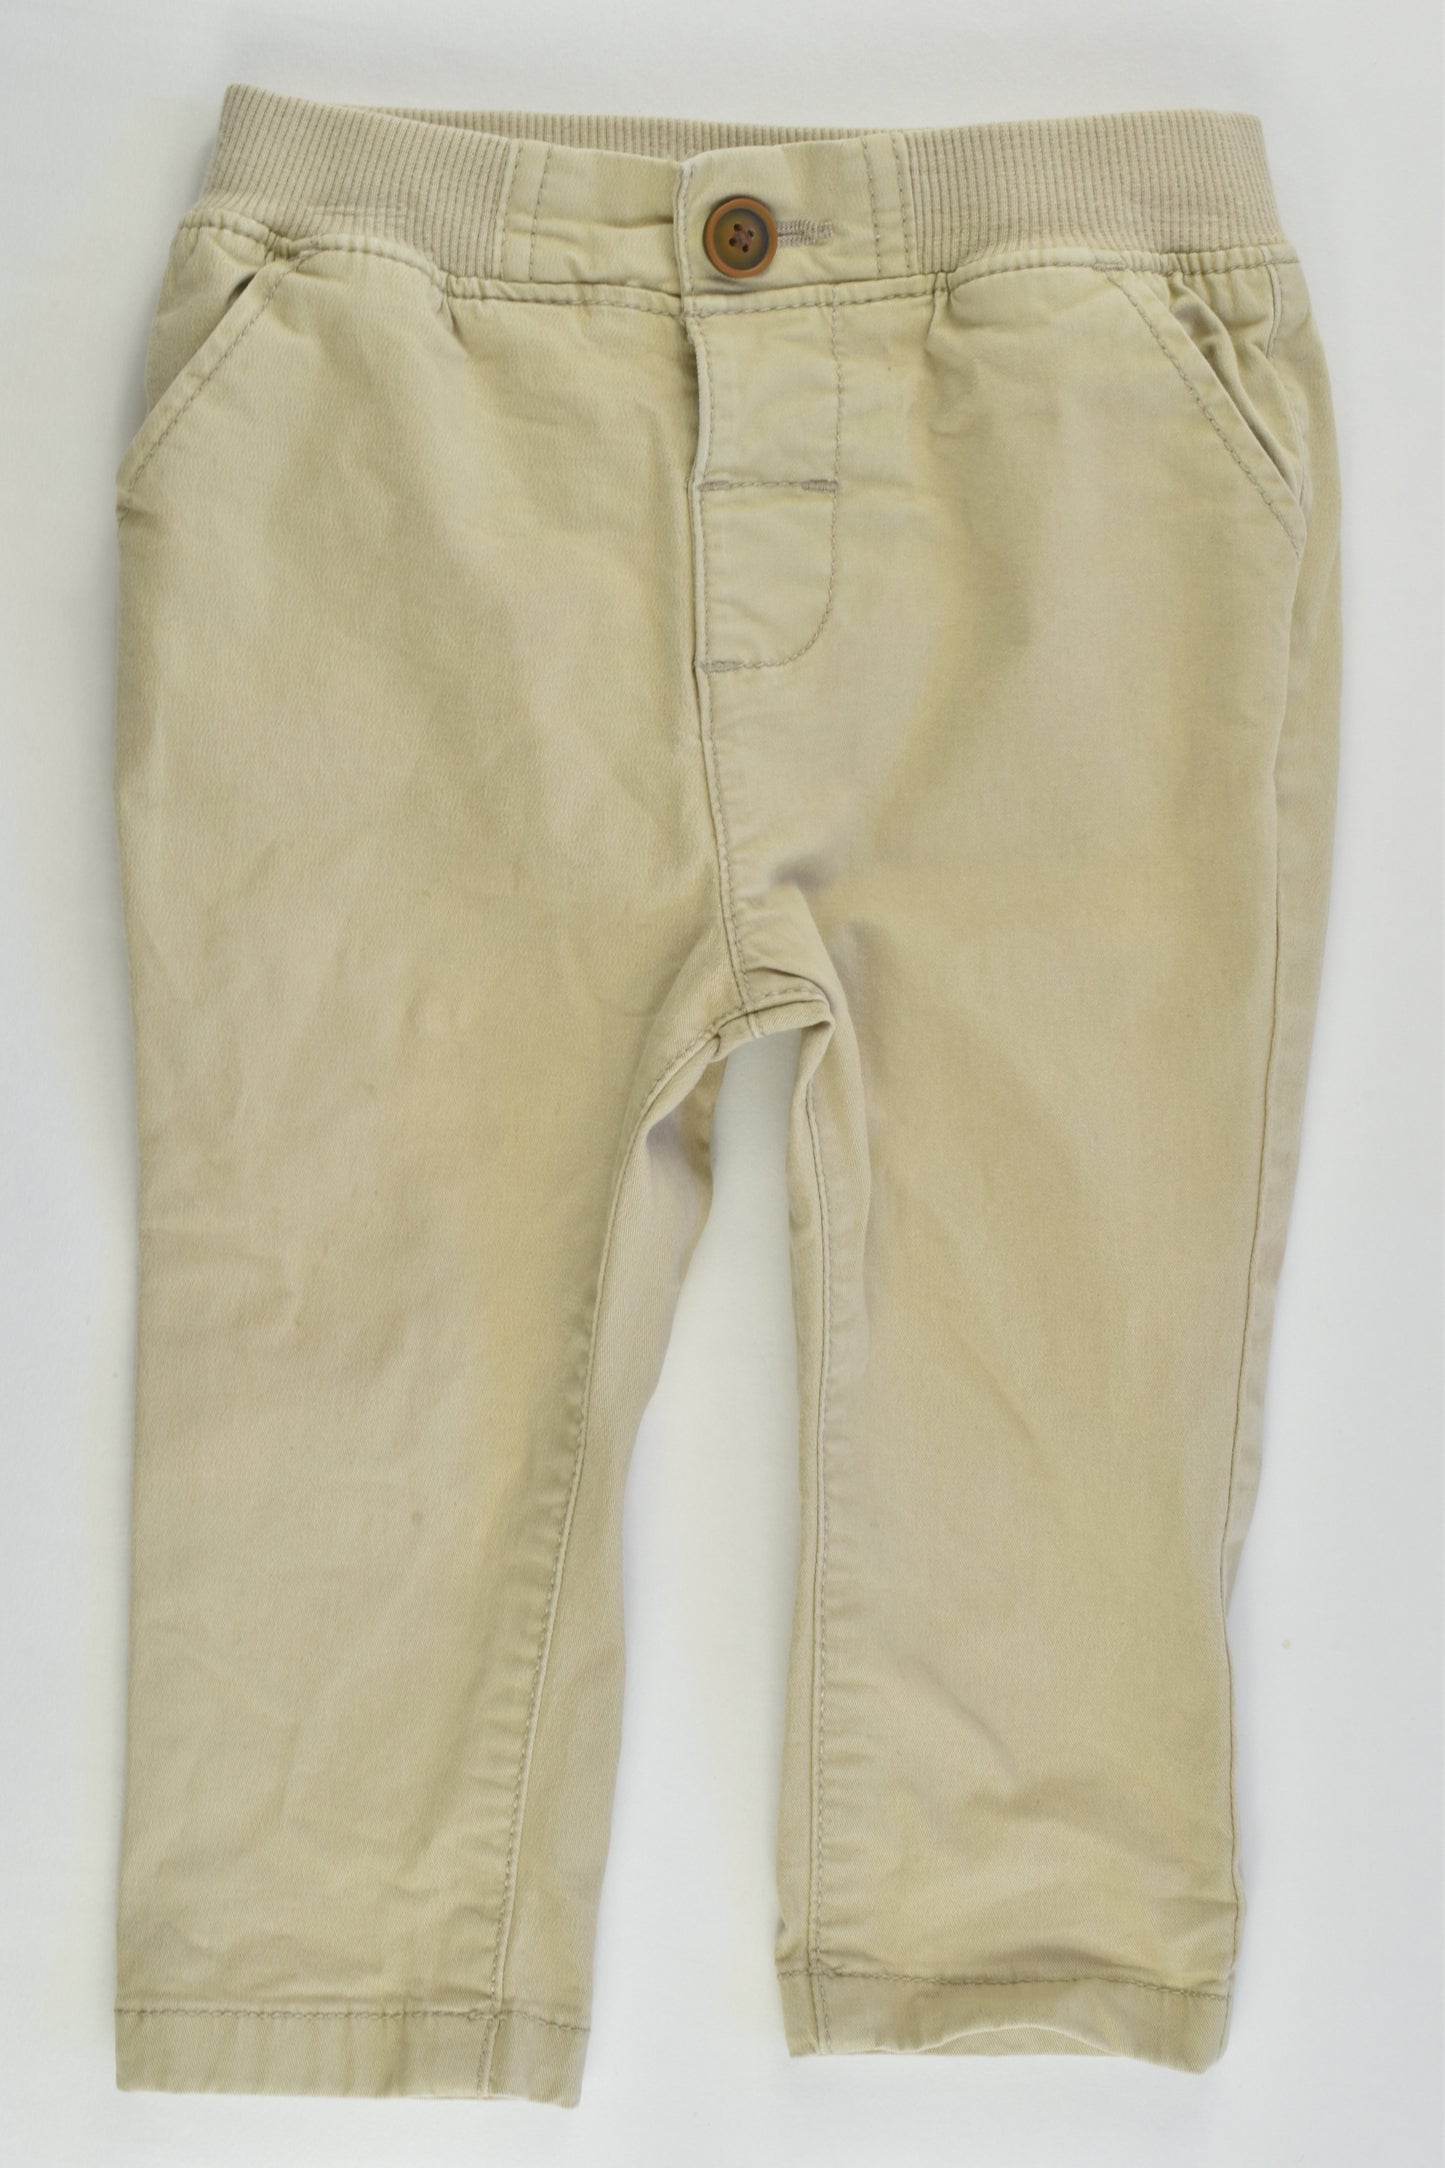 Target Size 0 (6-12 months) Pants